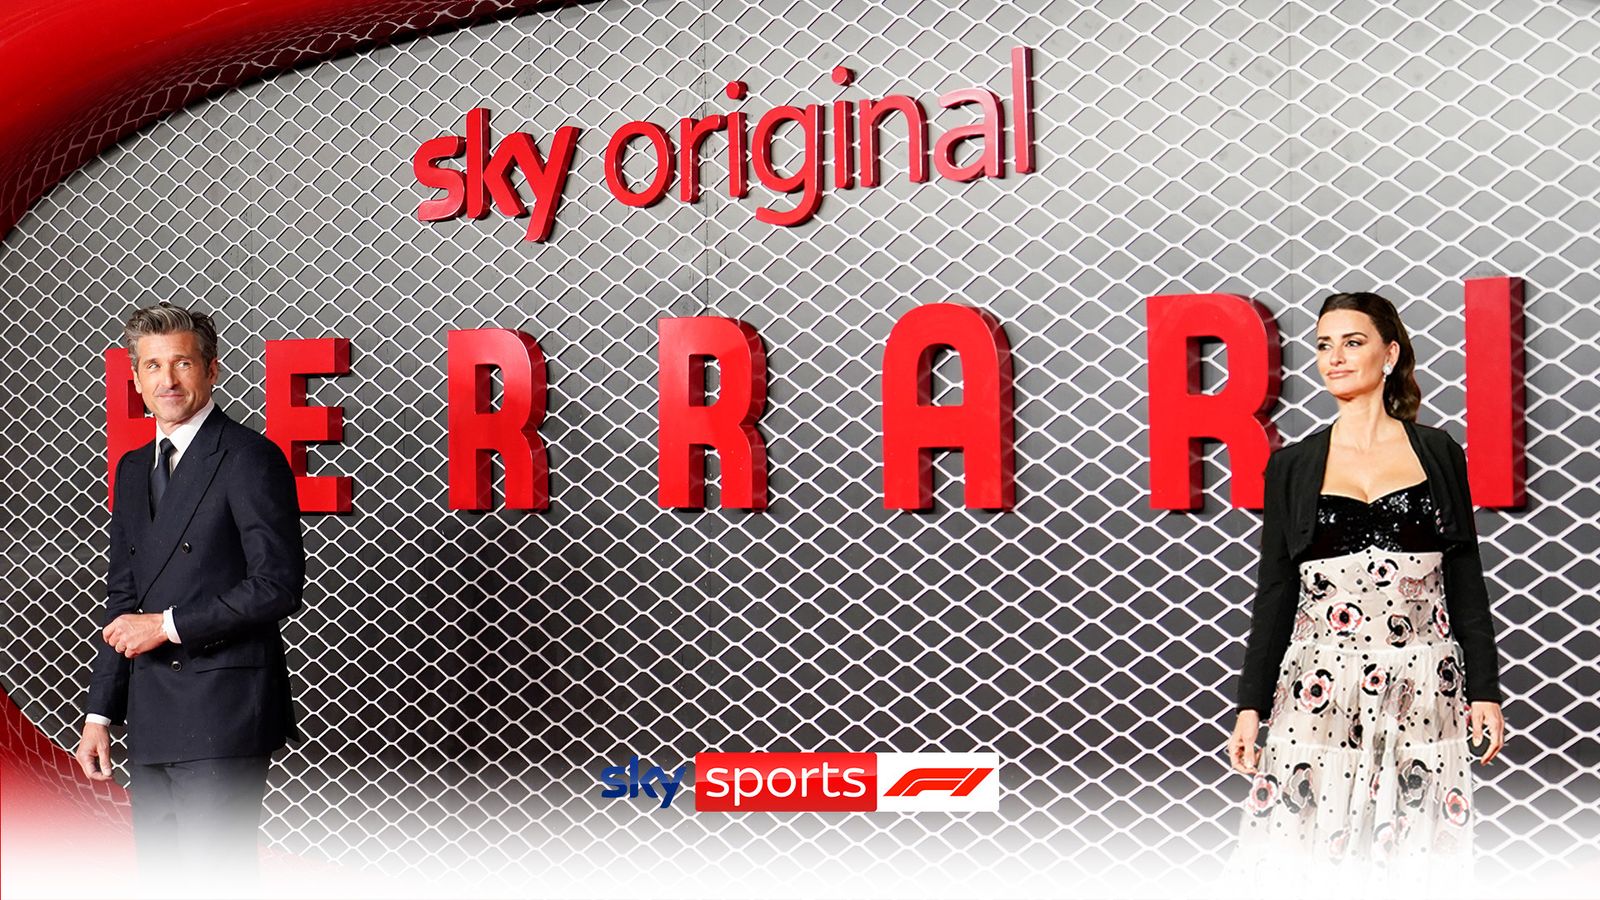 Película de Ferrari: Martin Brundle dice que el nuevo Michael Mann Sky Original ‘captura el verdadero espíritu’ de Enzo Ferrari